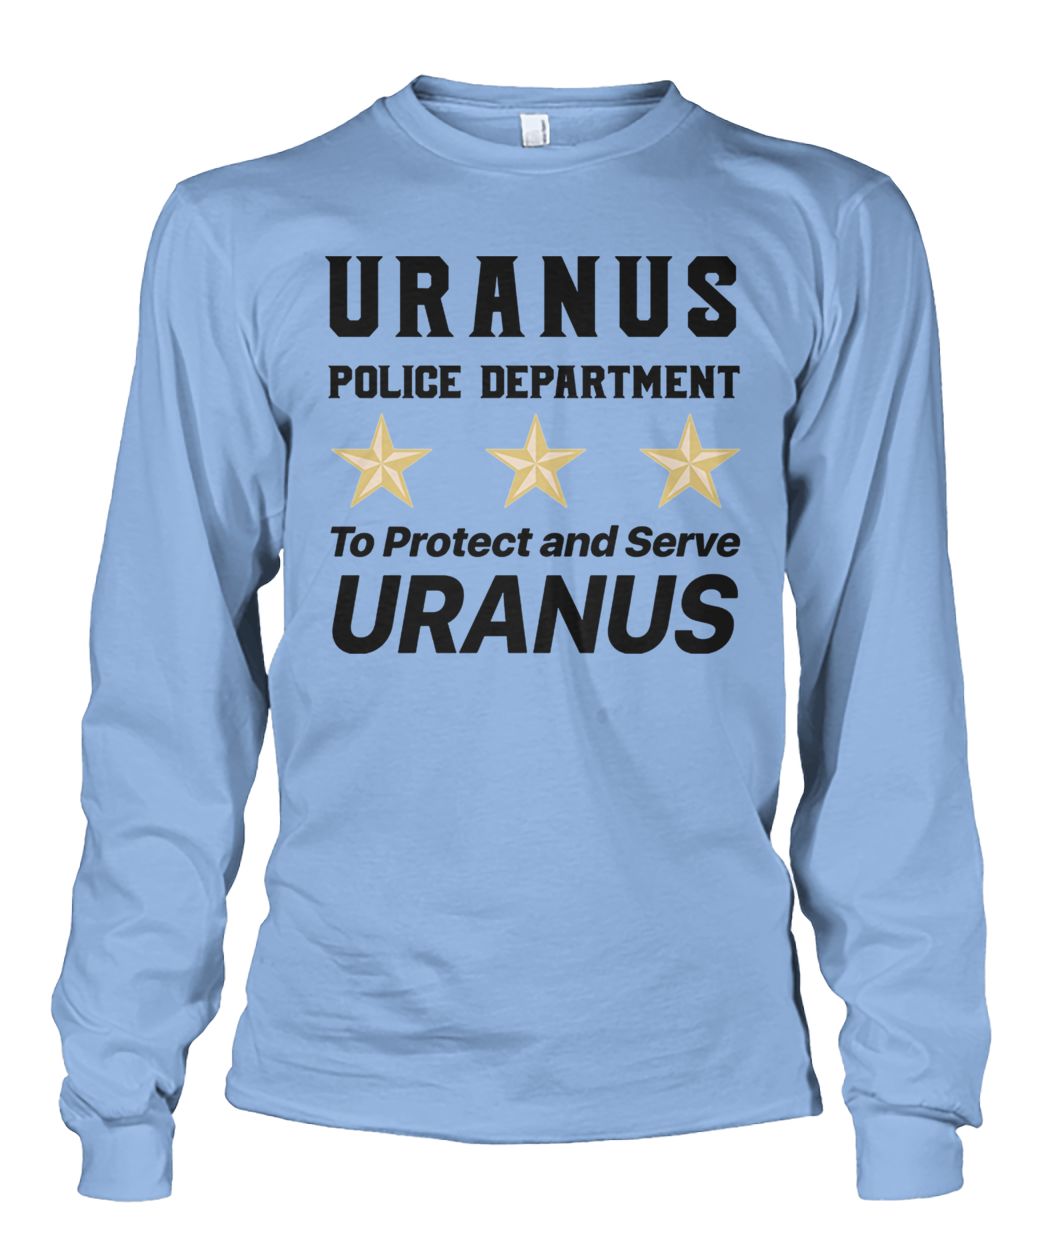 Uranus police department to protect and serve uranus unisex long sleeve